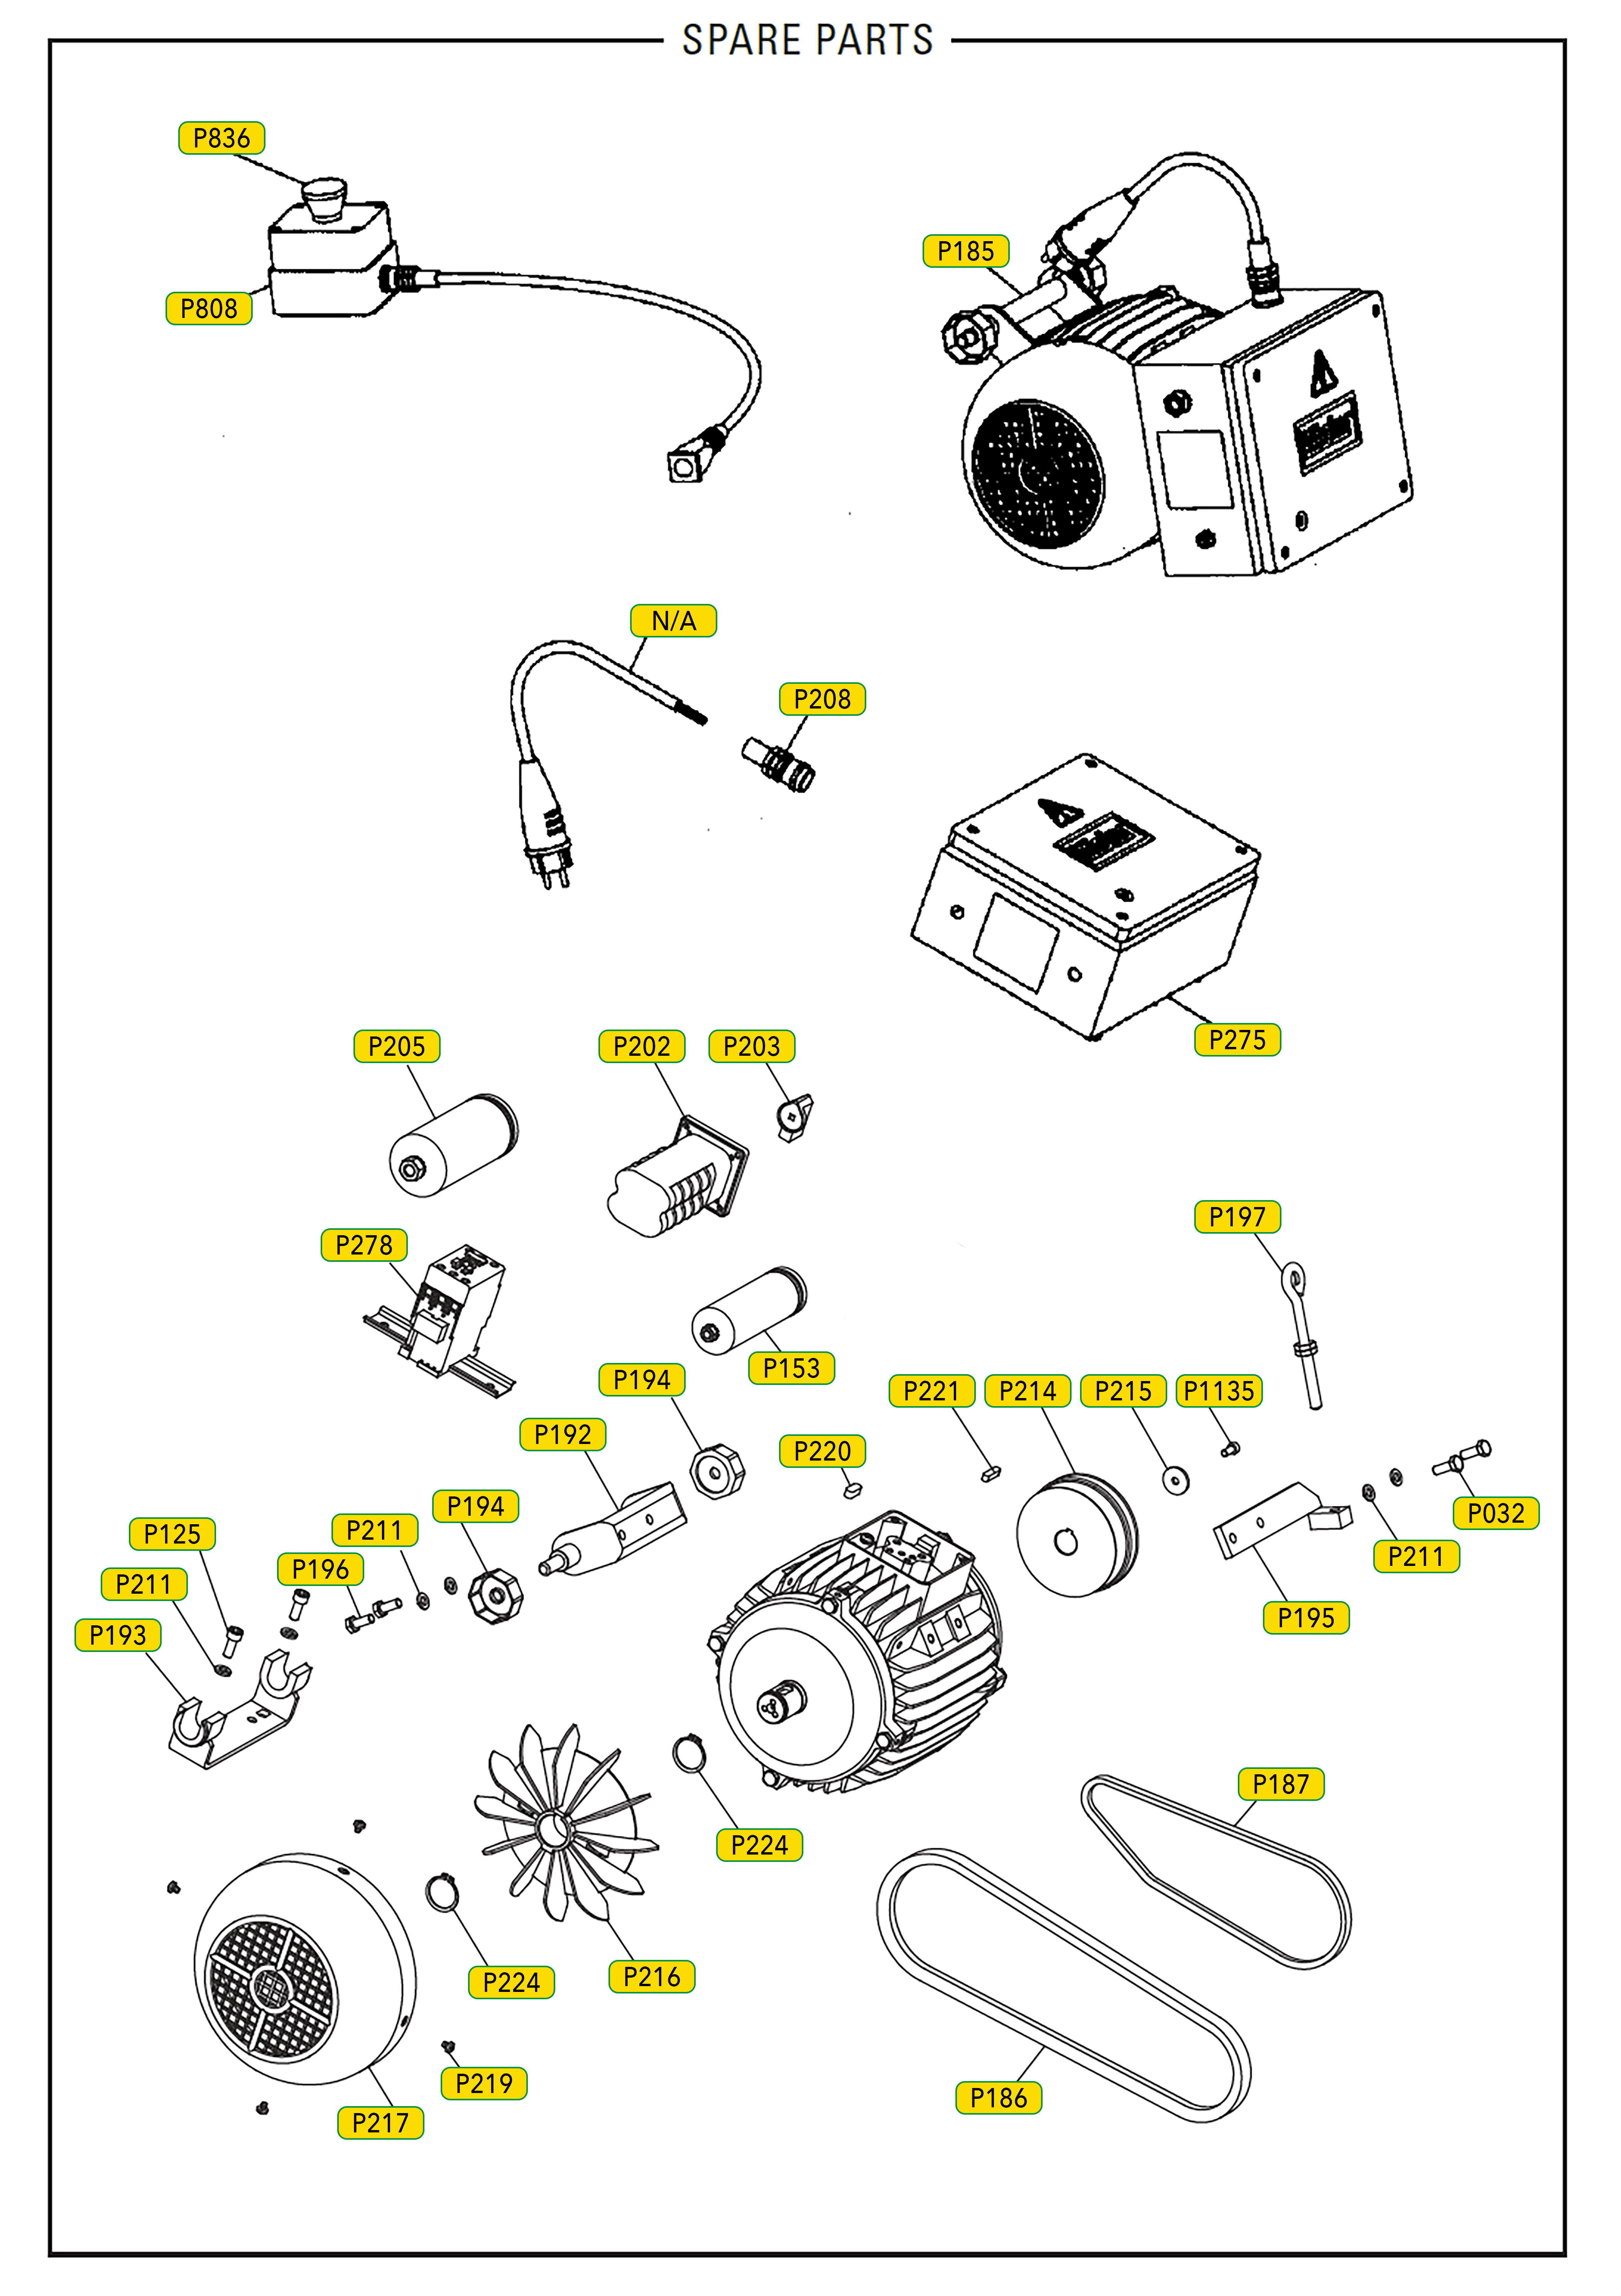 Hummel Motor + Electrical